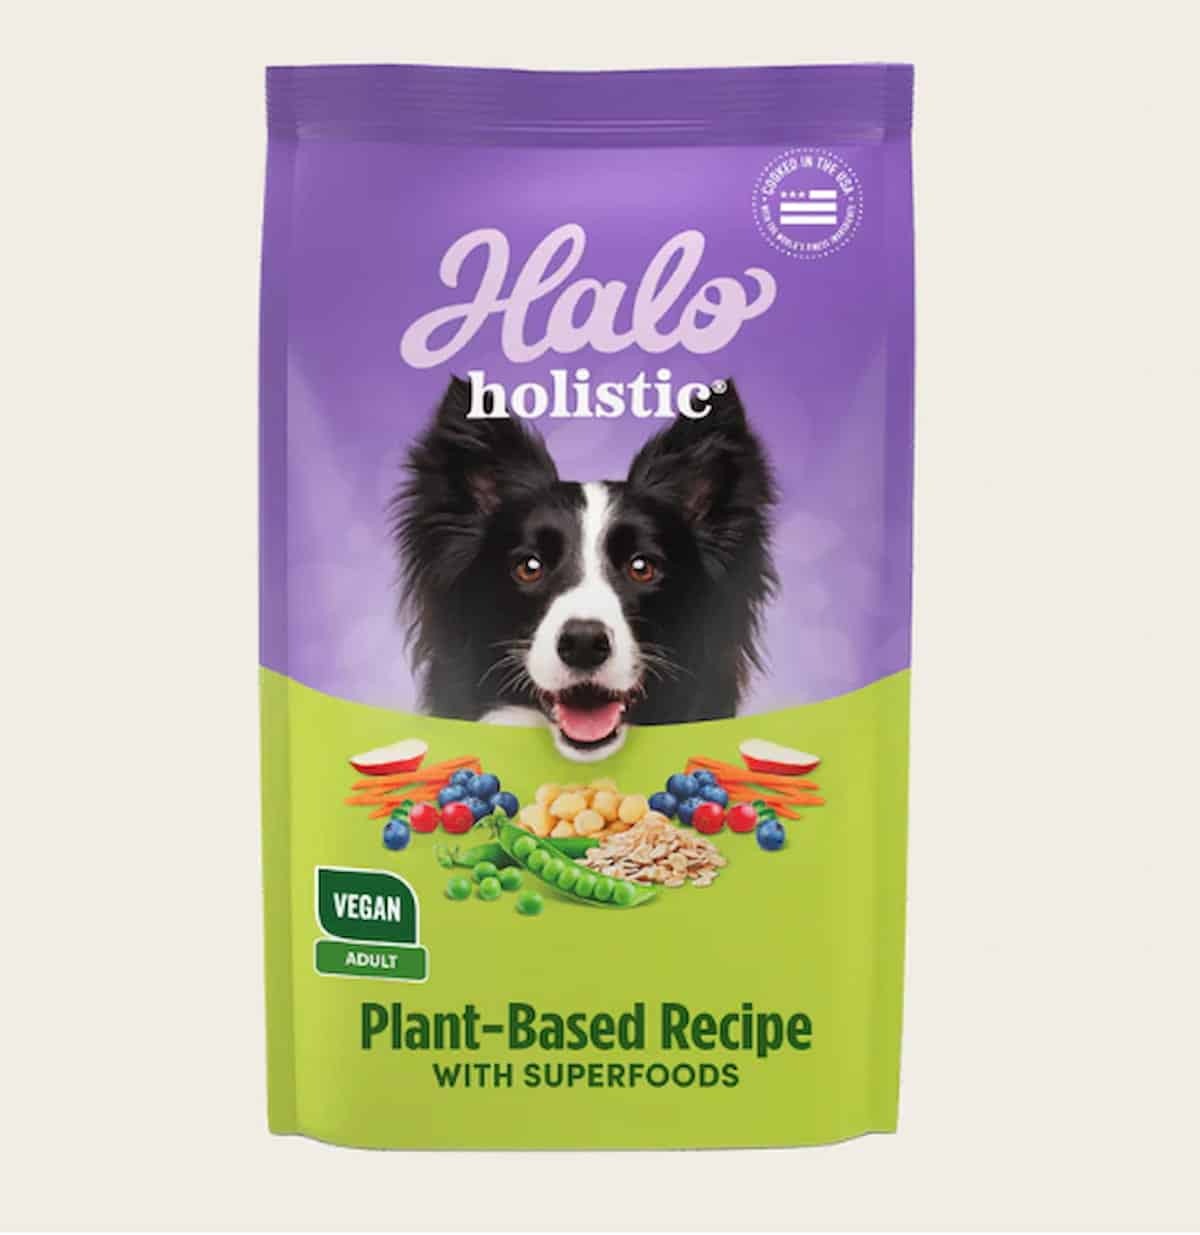 A bag of Halo holistic plant-based recipe dog food.